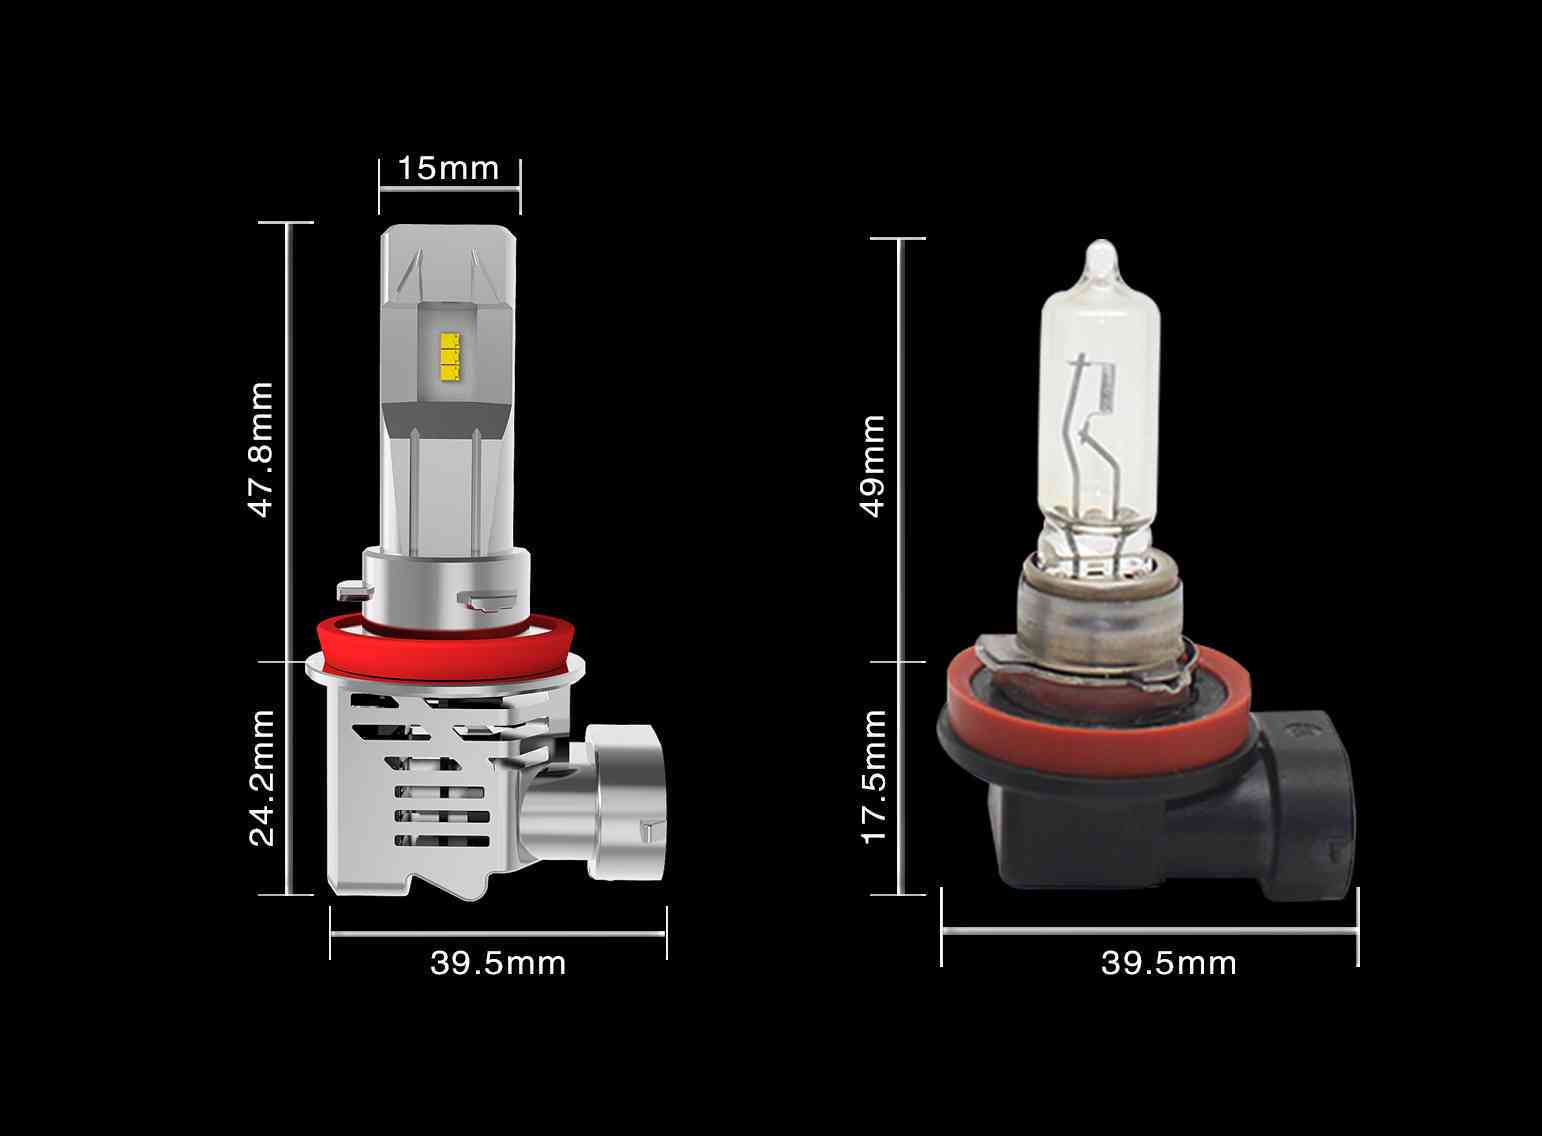 LED Headlight H4 Base 6V 30 LED Bulb High and Low Beam - Automotive -  LEDLight